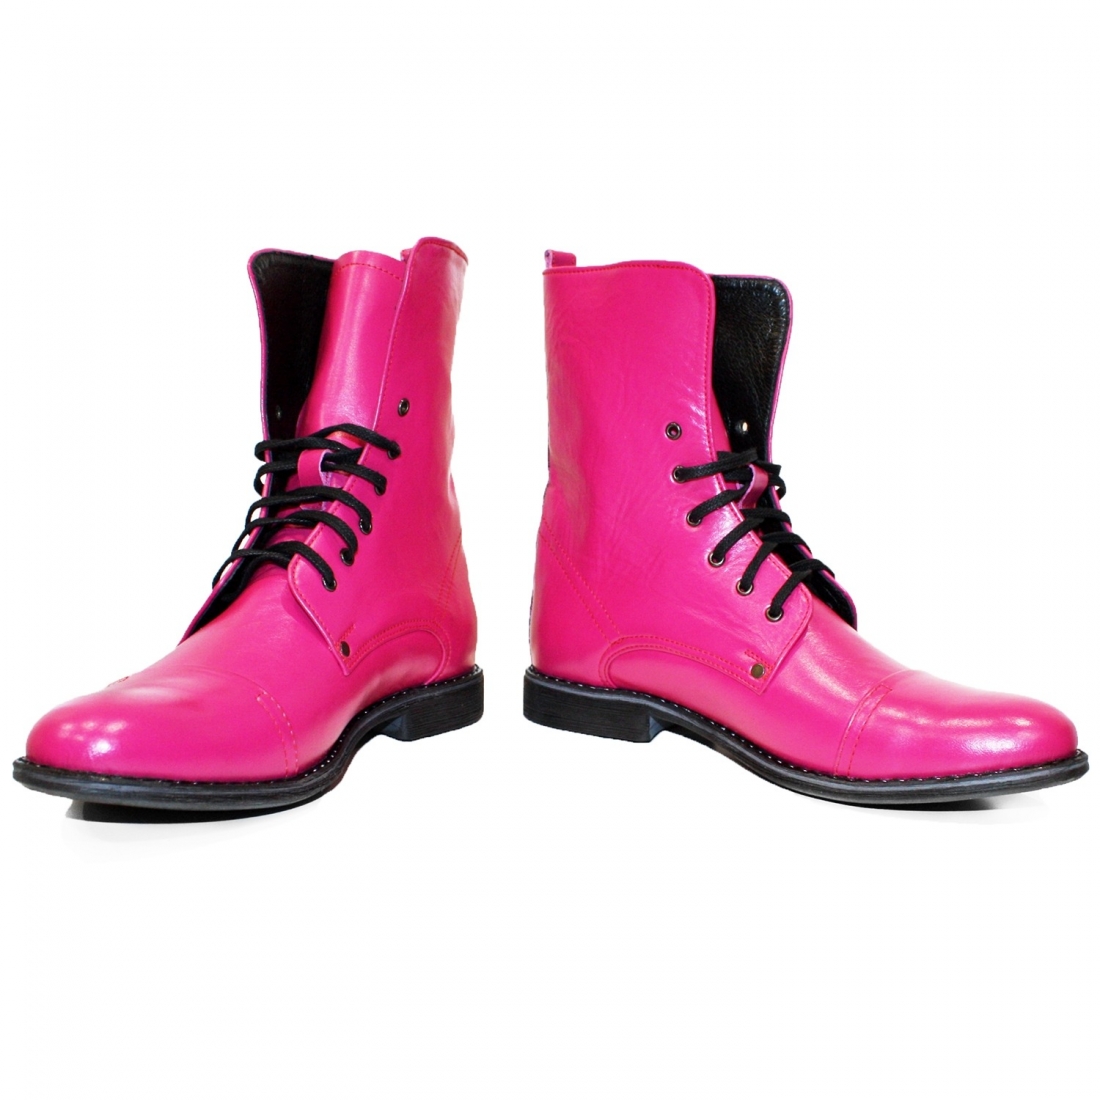 Modello Dodallo - High Boots - Handmade Colorful Italian Leather Shoes